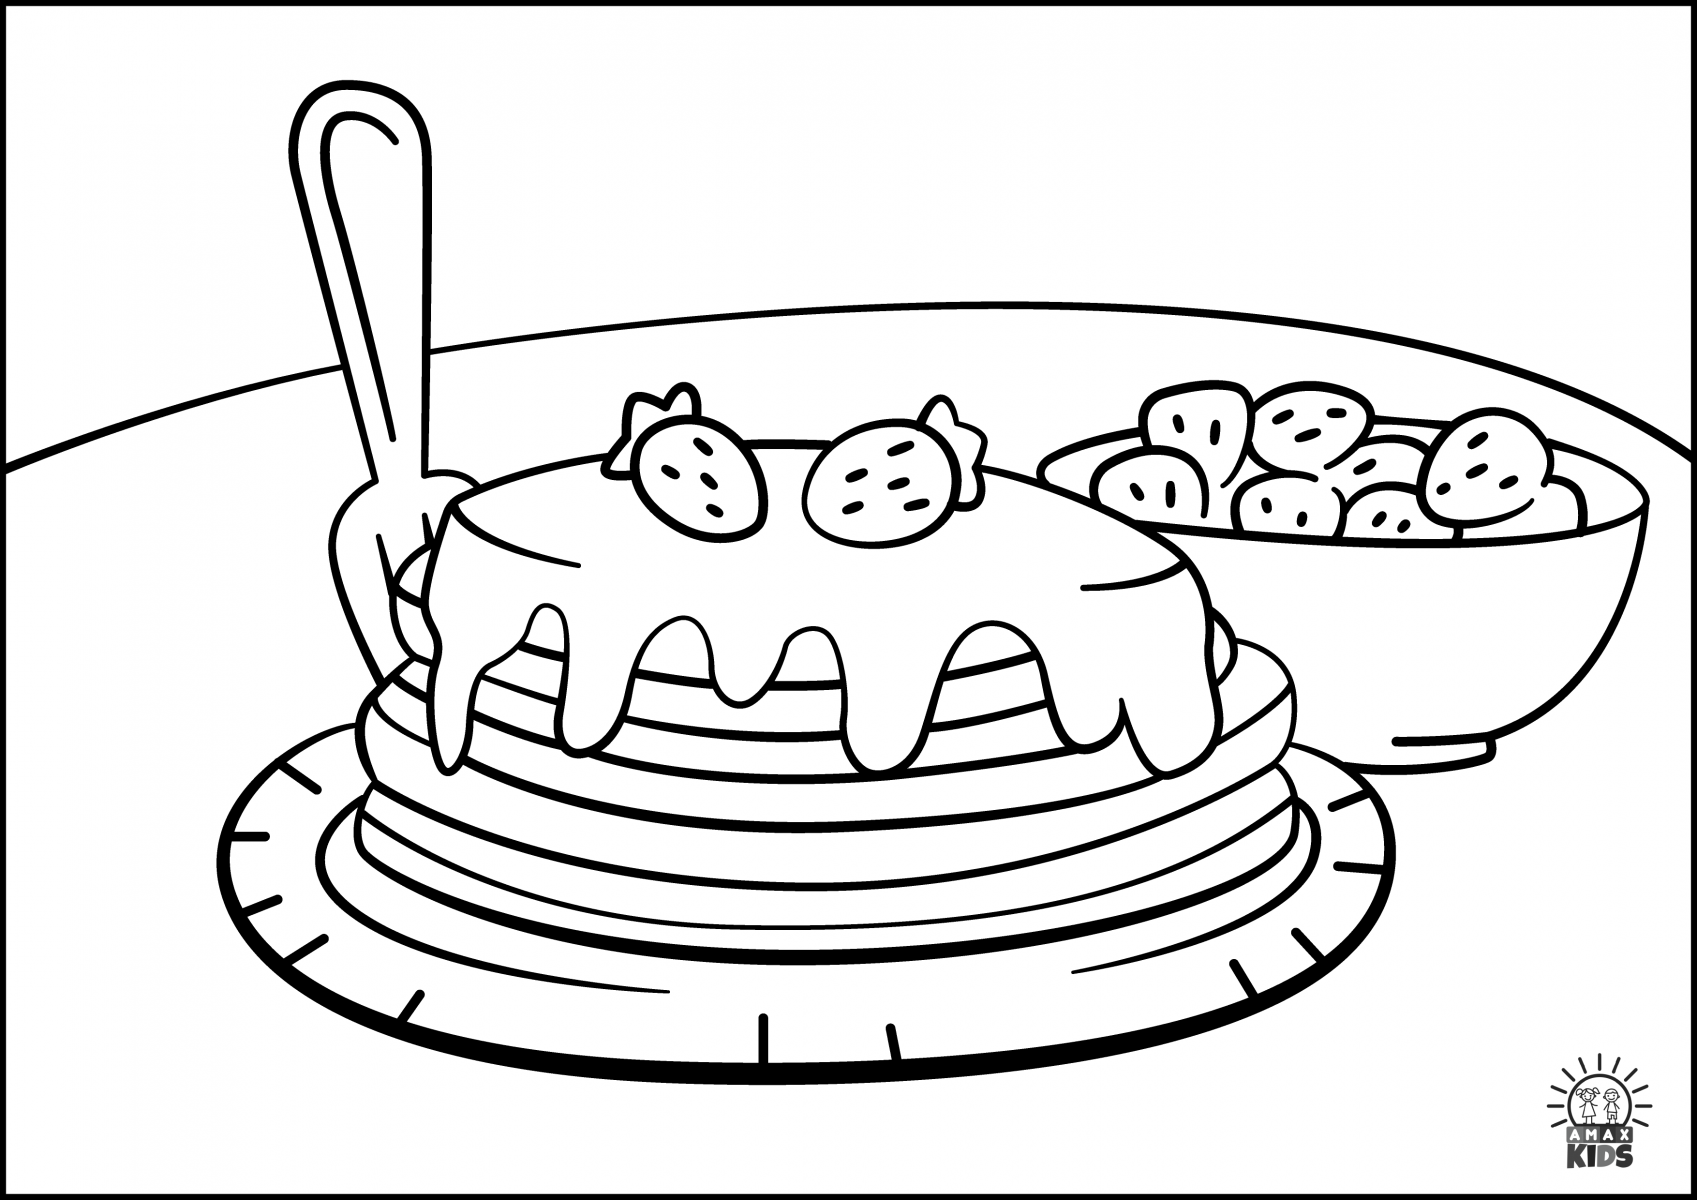 coloring-page-of-pancakes-boringpop